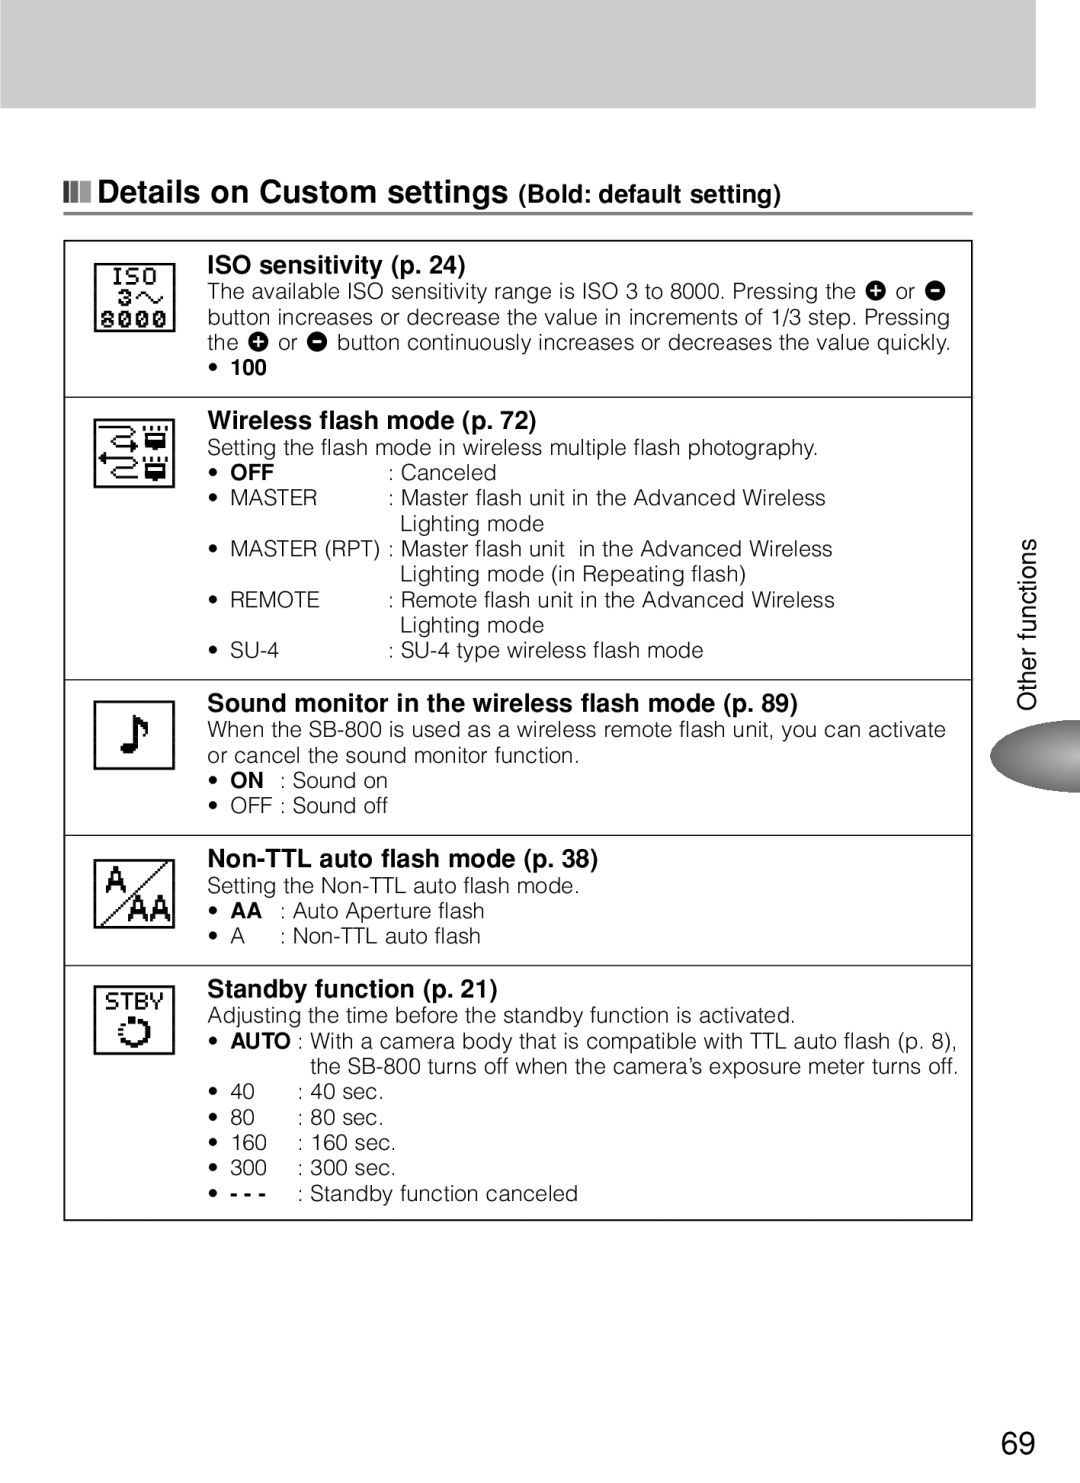 Nikon SB-800 Details on Custom settings Bold default setting, ISO sensitivity p, Wireless flash mode p, Standby function p 